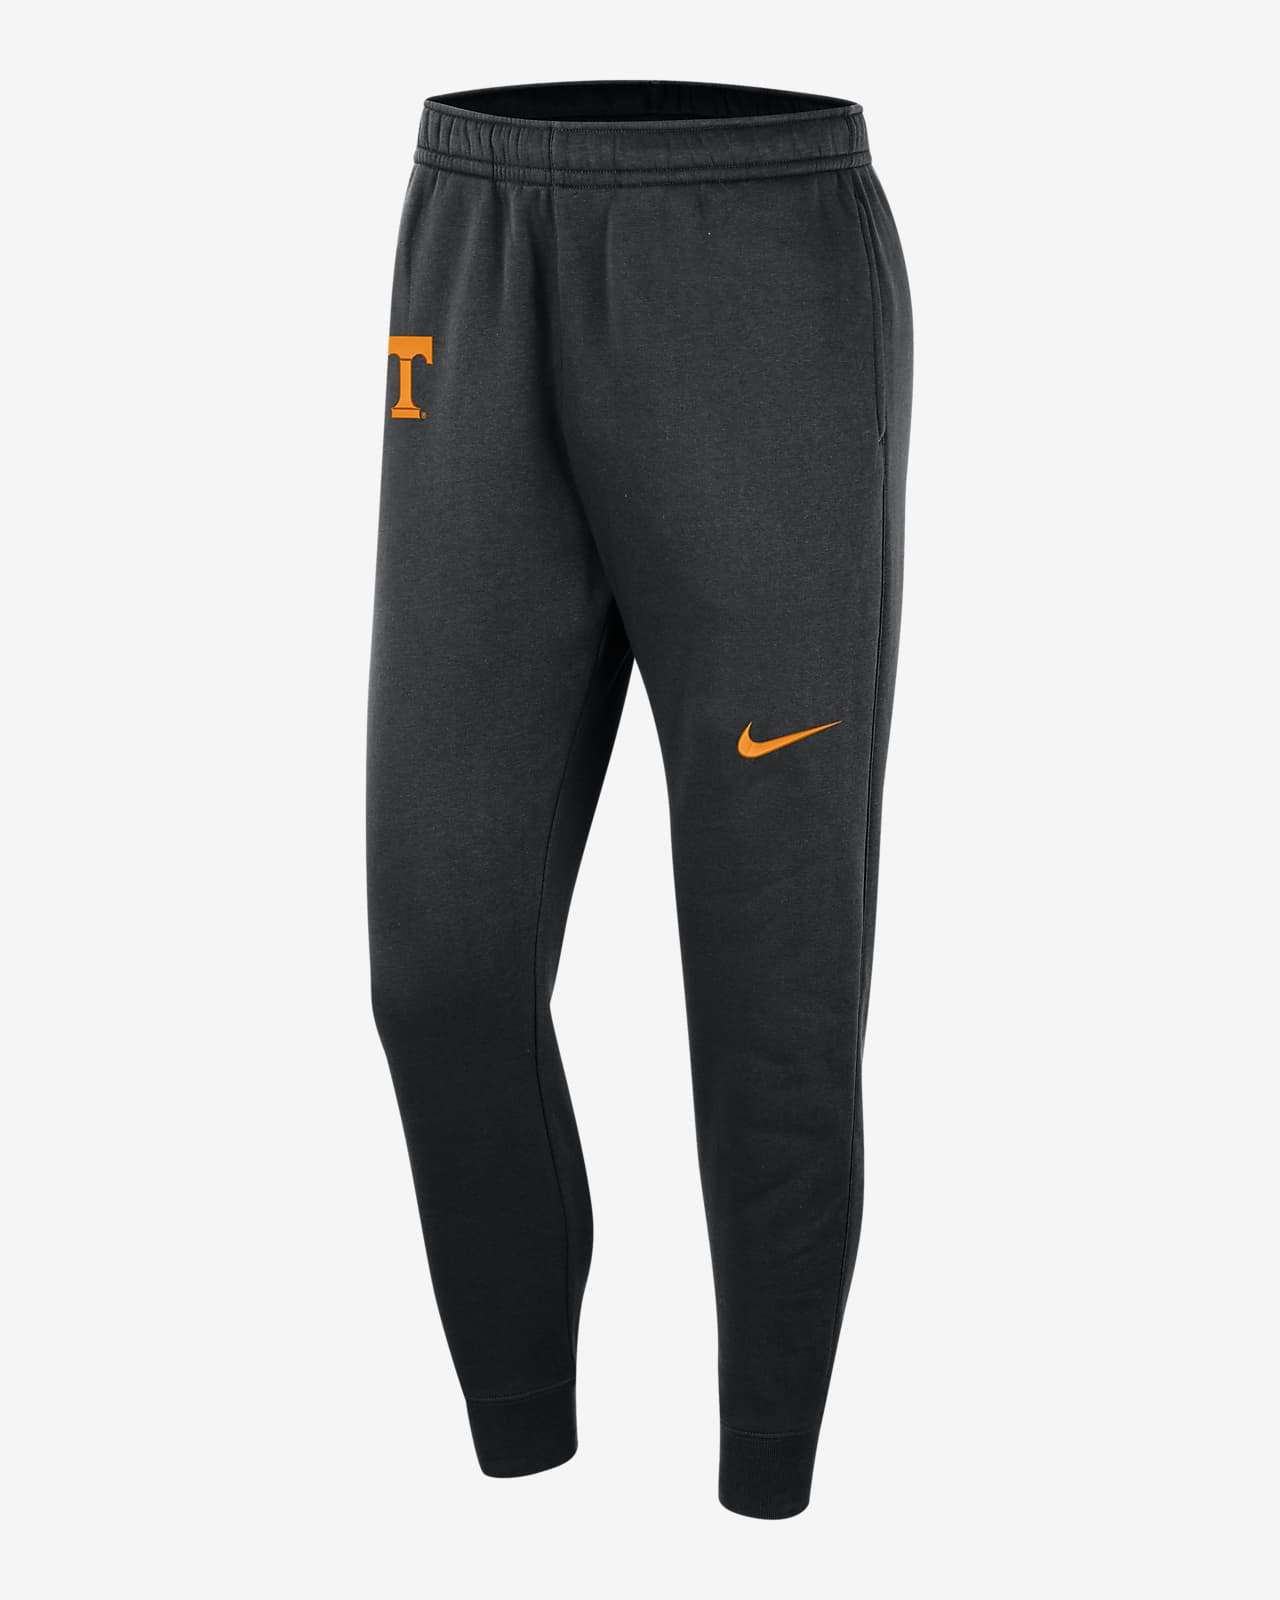  Nike Men's Sportswear Optic Jogger Pants Black Size XX